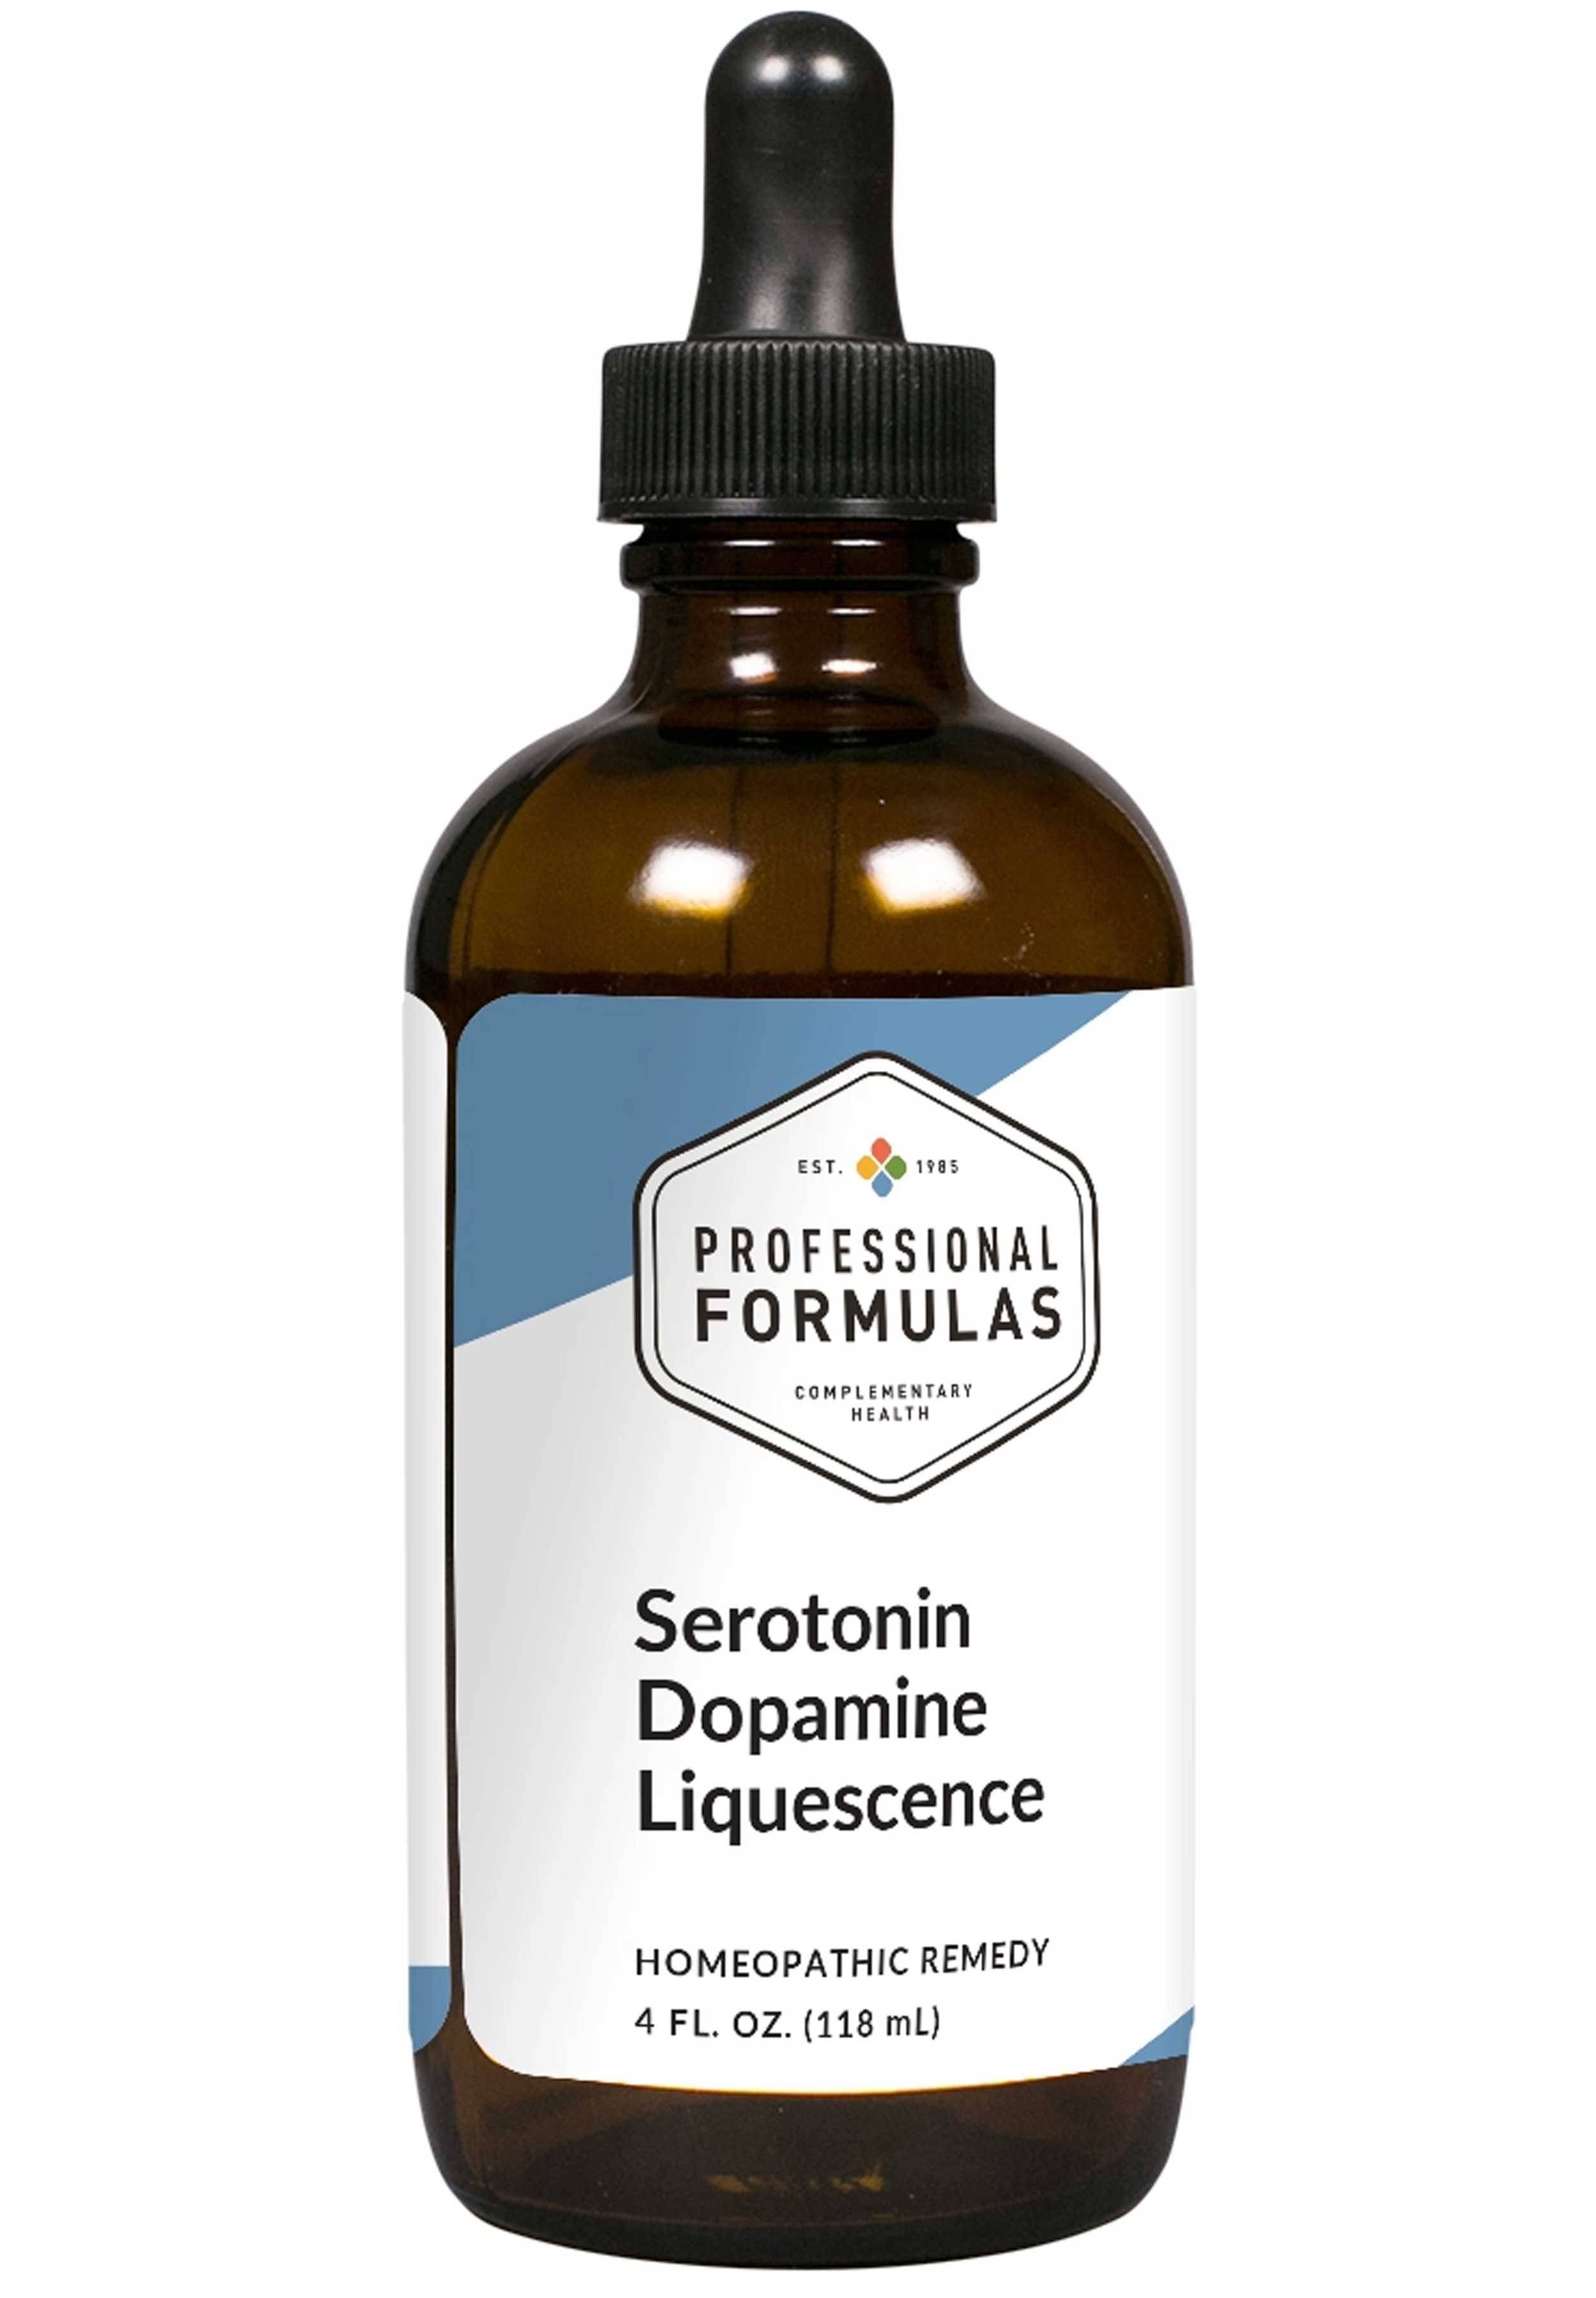 Professional Formulas Serotonin Dopamine Liquescence